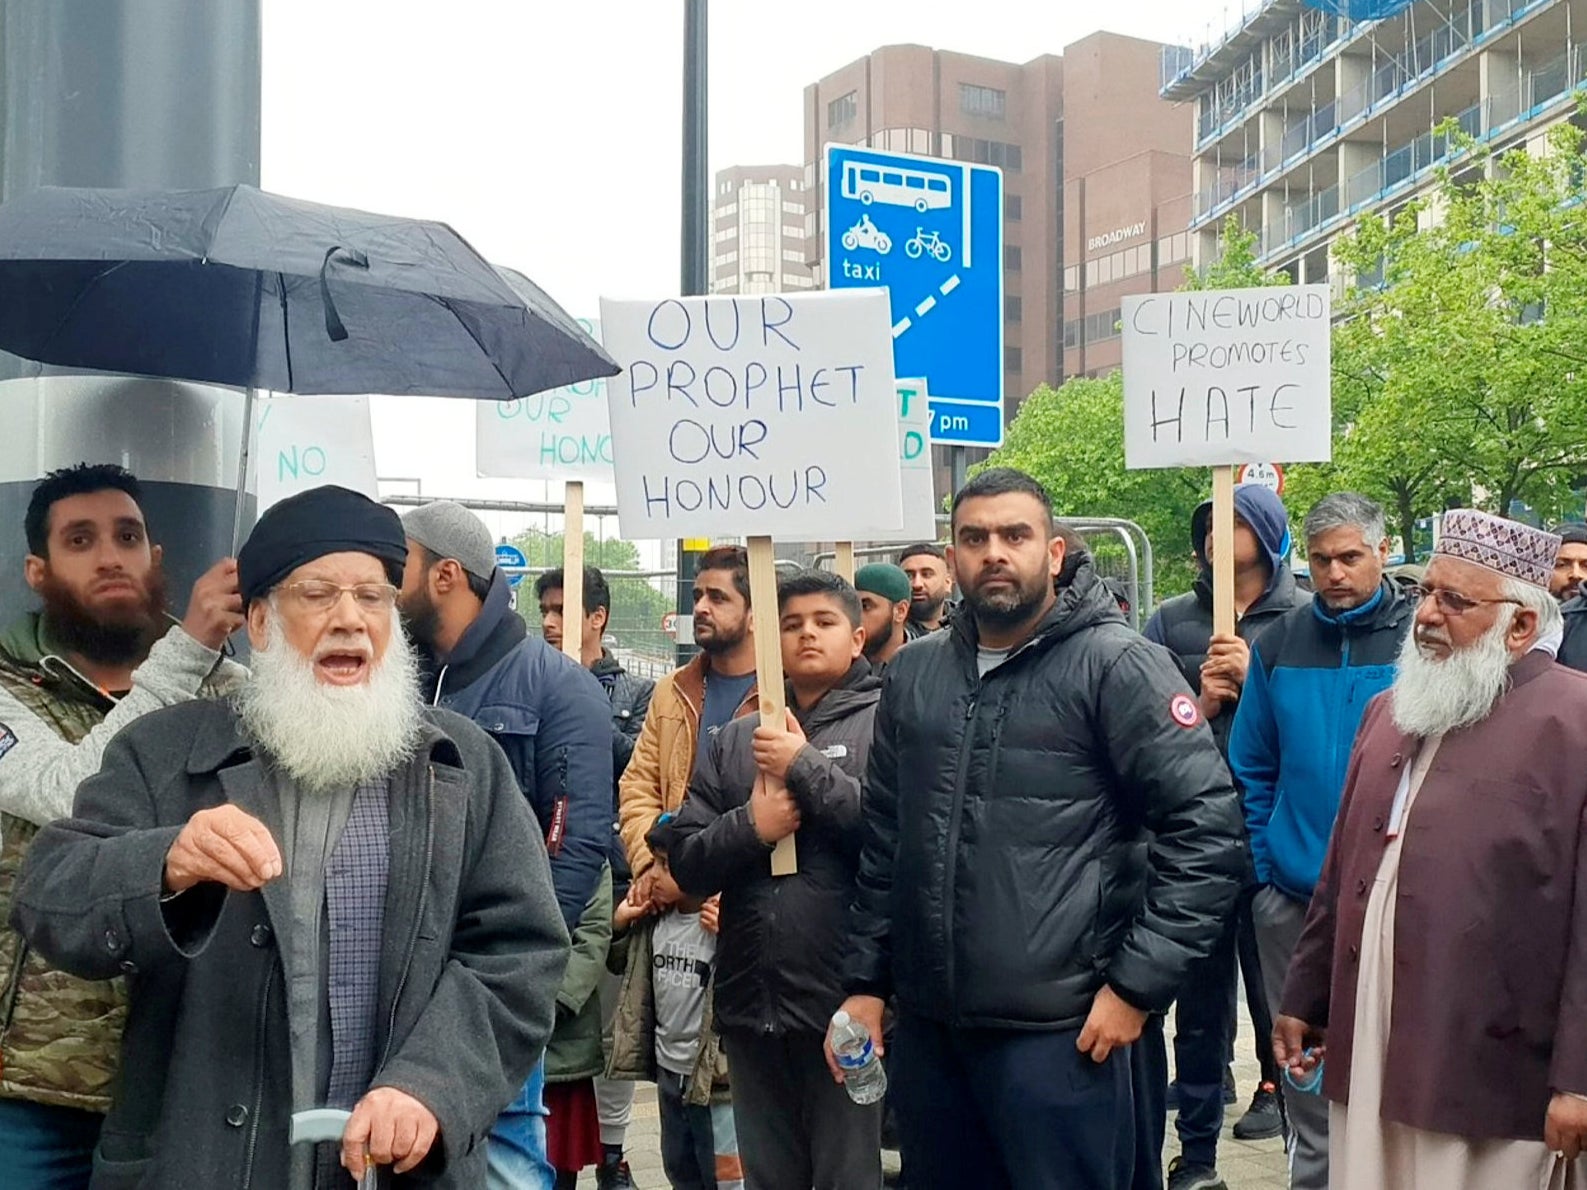 Protests were held in Bolton, Blackburn, Bradford, Sheffield and Birmingham